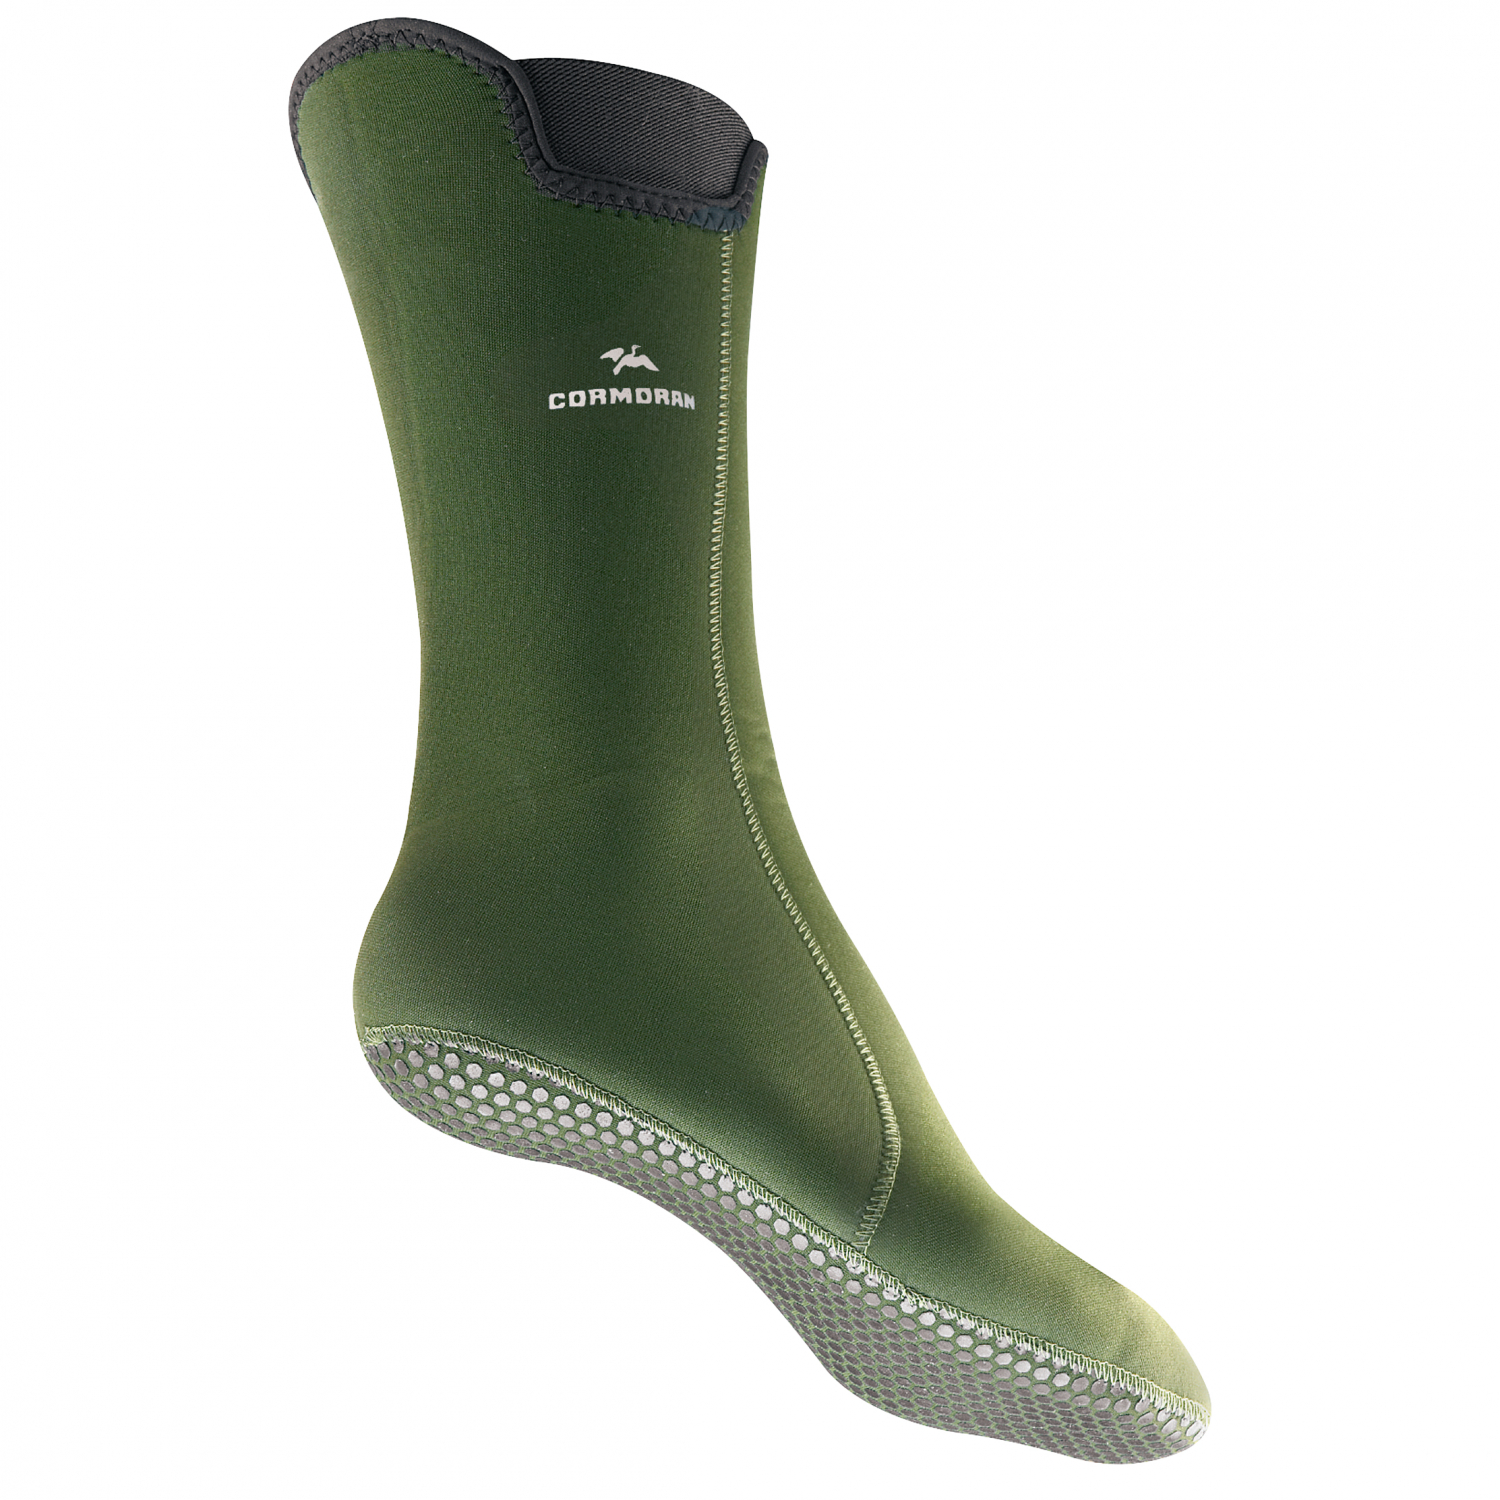 Cormoran Unisex Neoprene Boots Socks (long) Sz. 45-47 